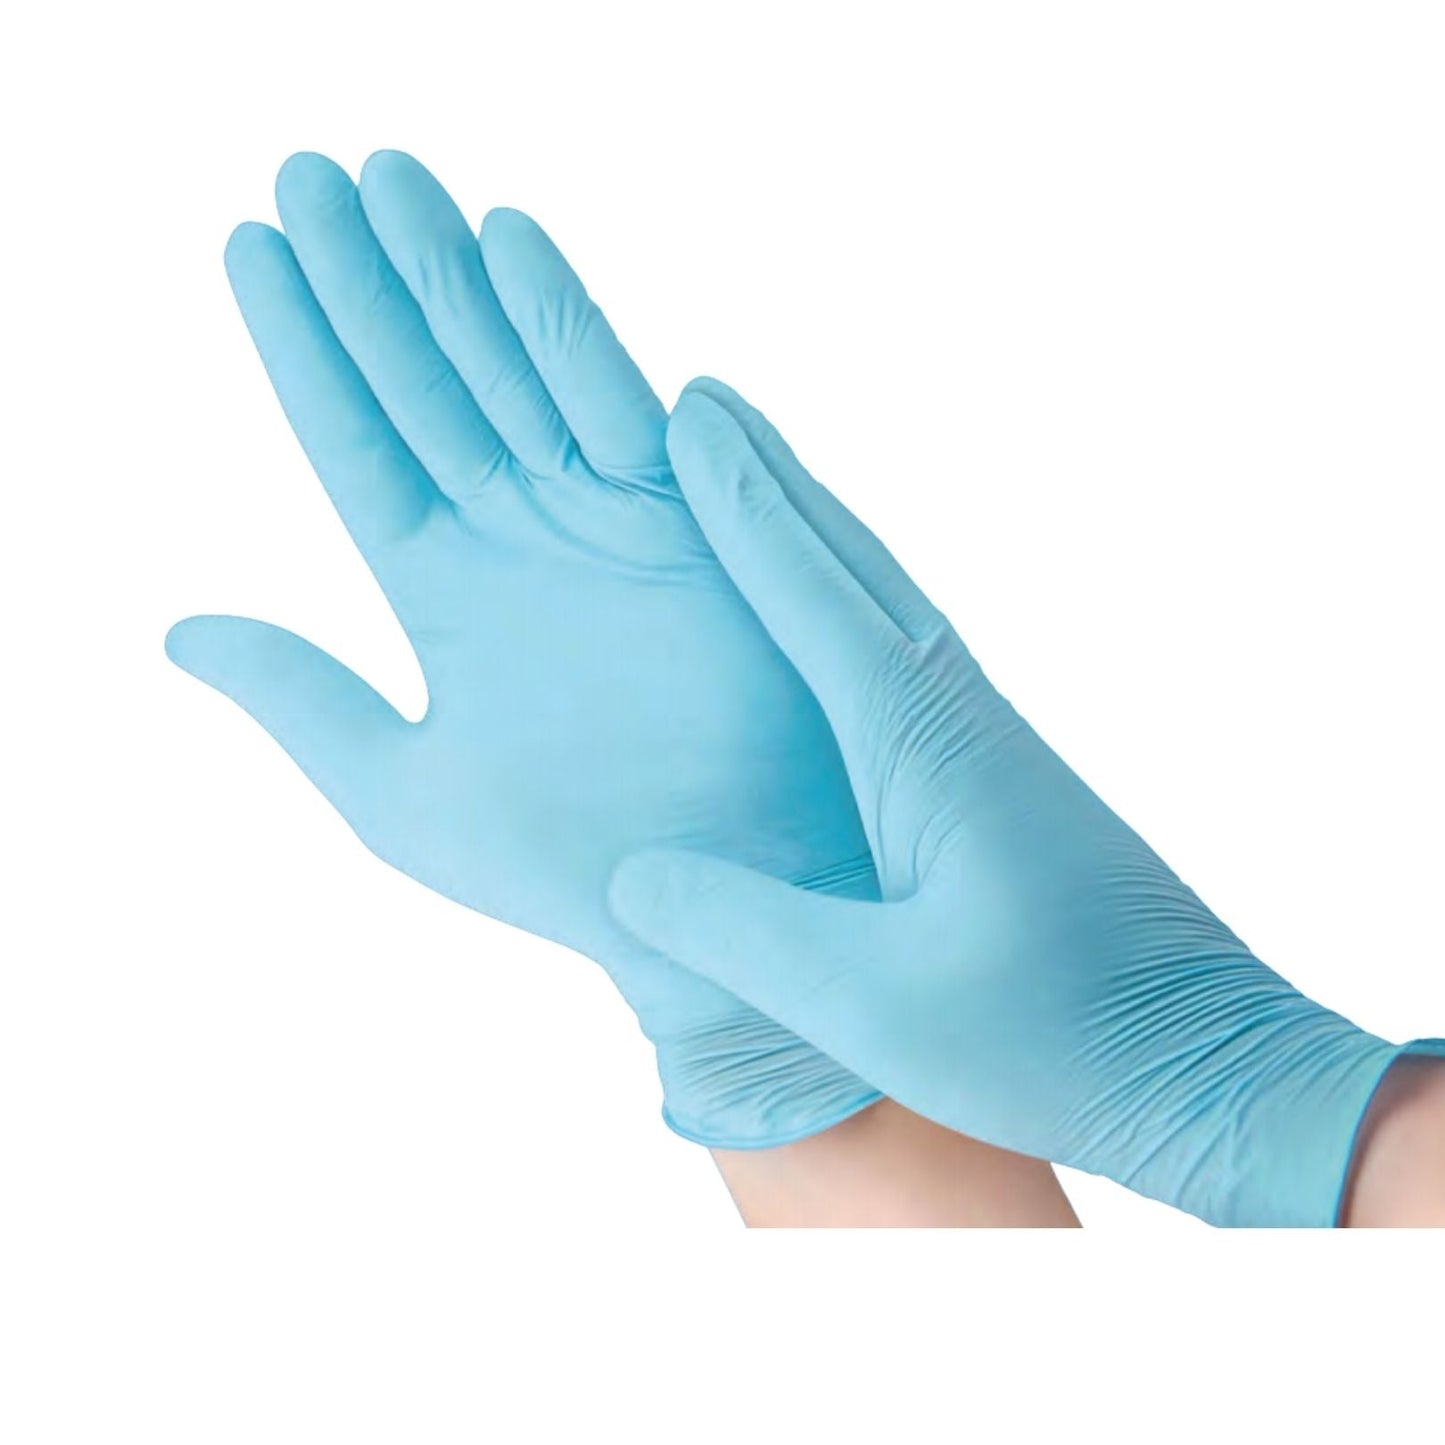 Nitrile Gloves Pallet "A+ Plus" -720 Boxes - 1 Pallet ($3/Box of 100pcs-100% Nitrile Patient Examination Gloves/ FDA 510(K), 4Mil) - USA Medical Supply